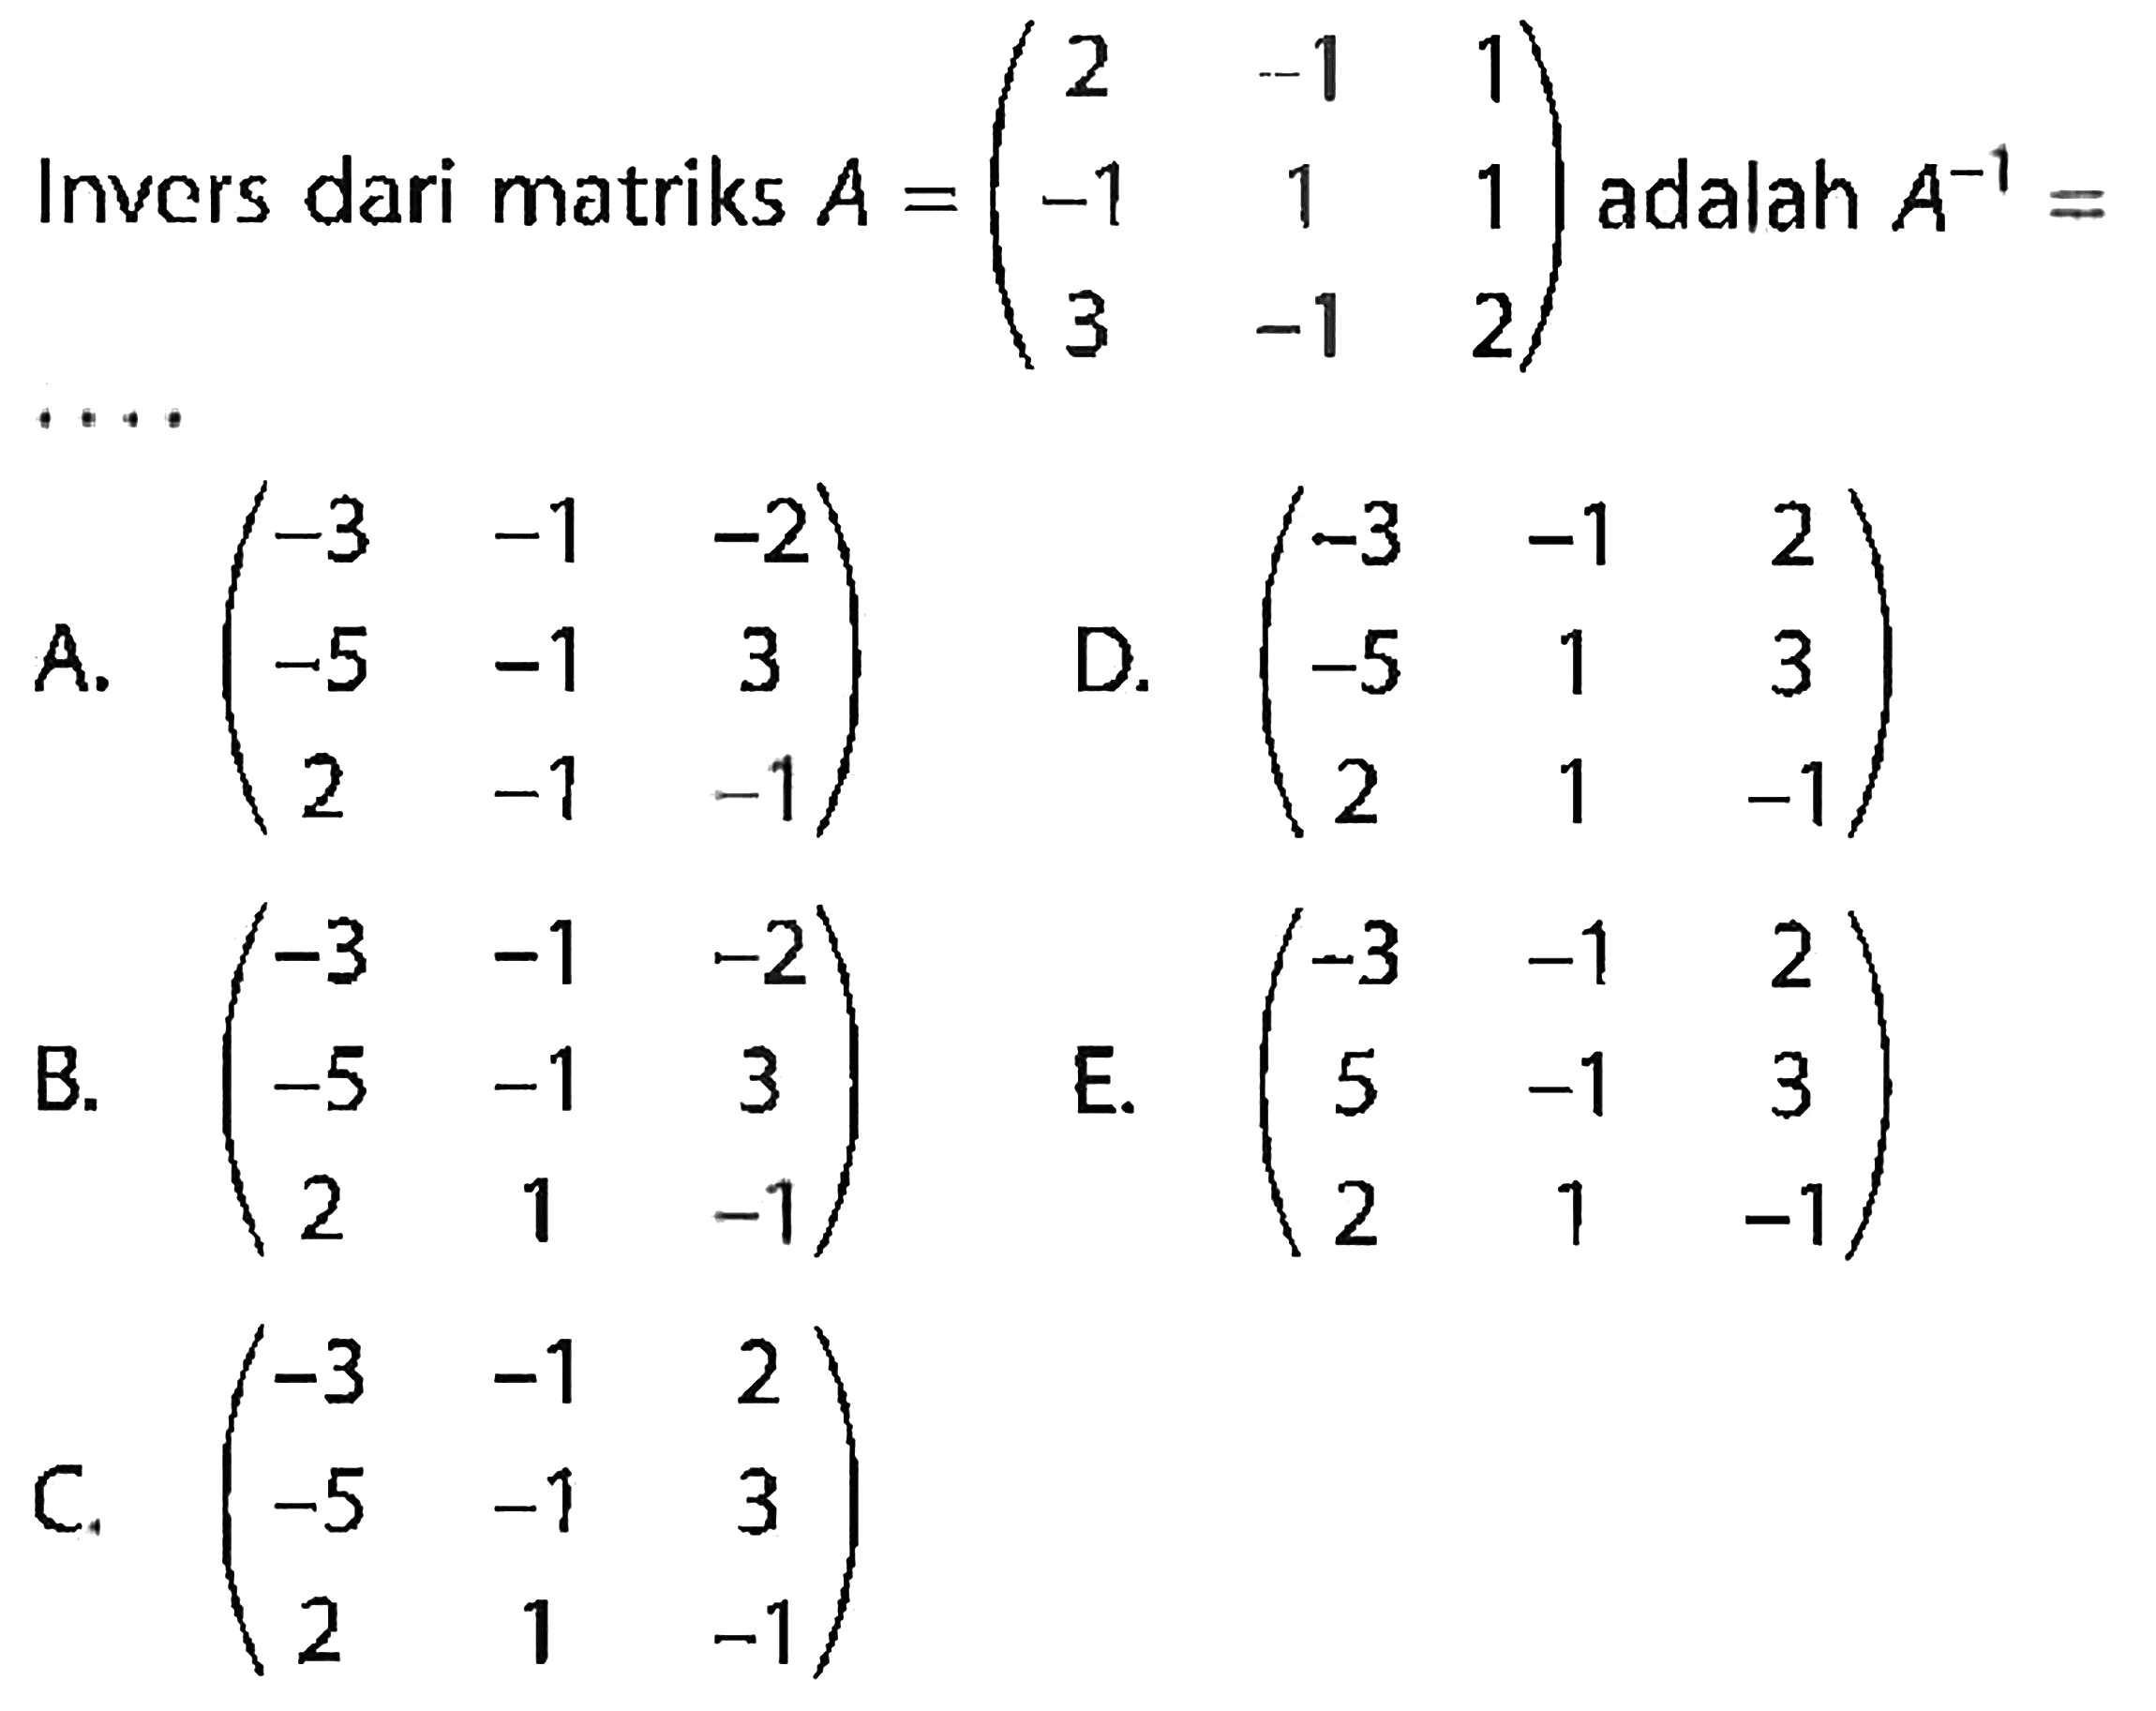 Invers dari matriks A = (2  -1  1  -1  1  1  3  -1  2) adalah A^(-1) = .... 